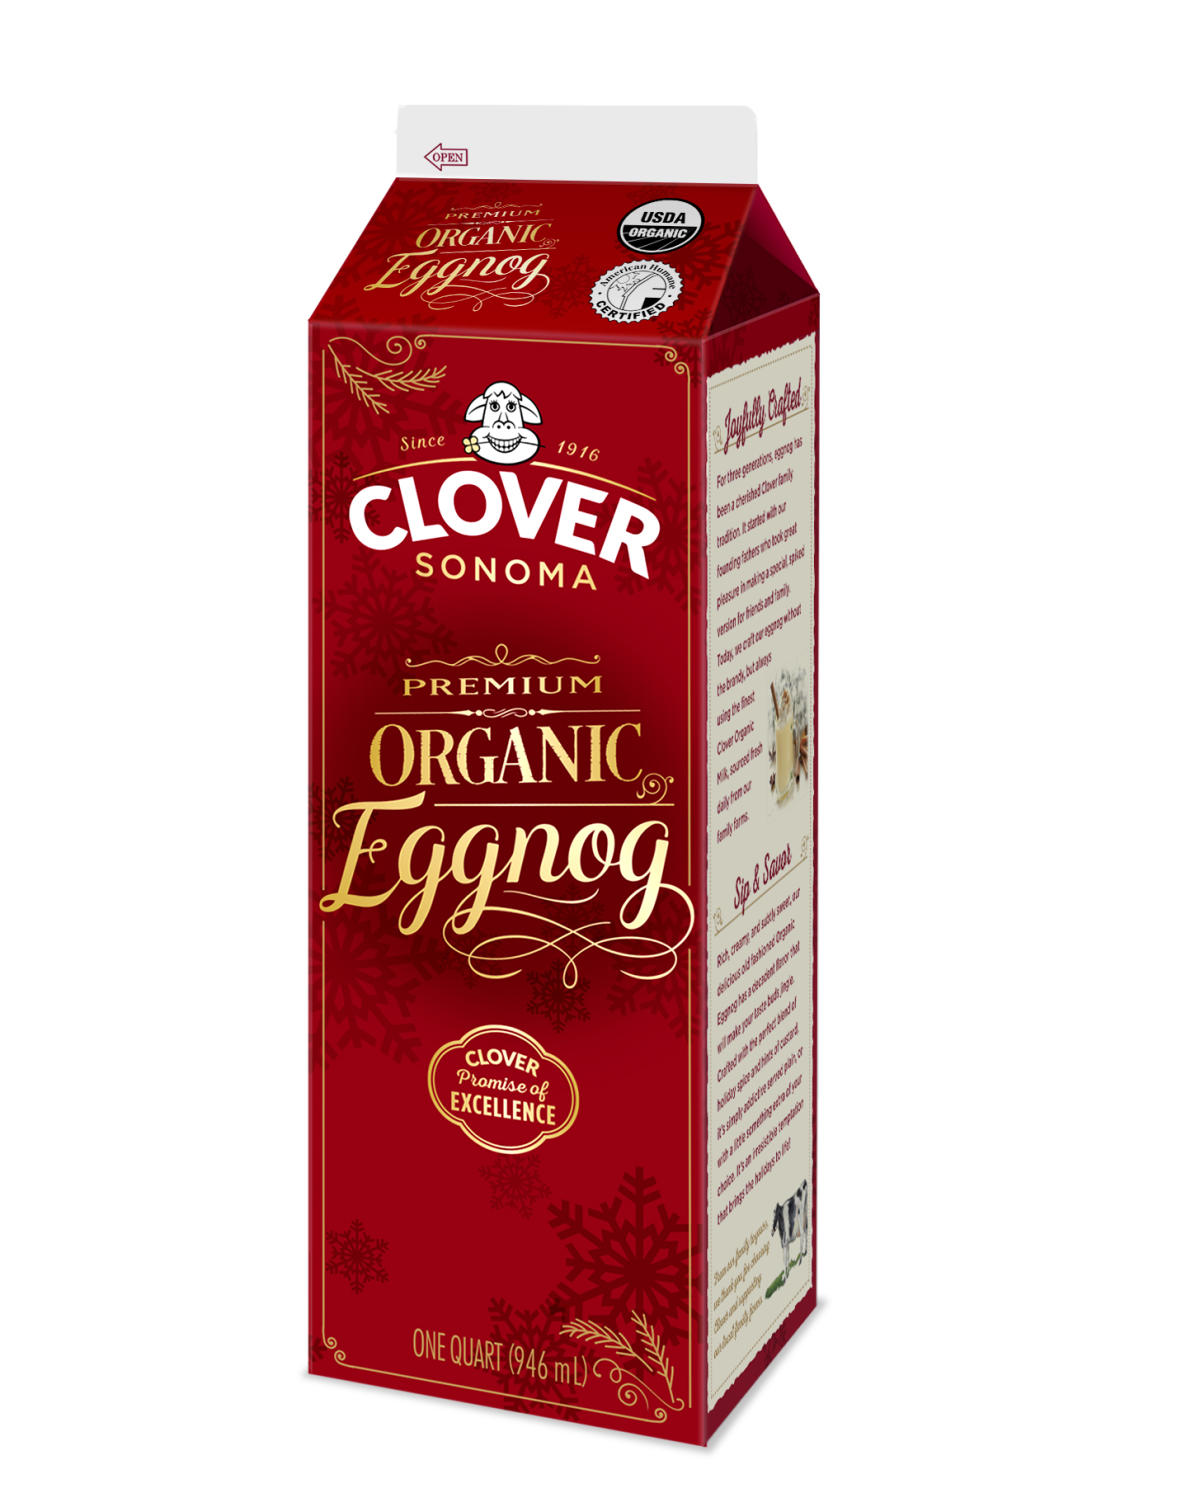 Clover Light Eggnog - 1qt